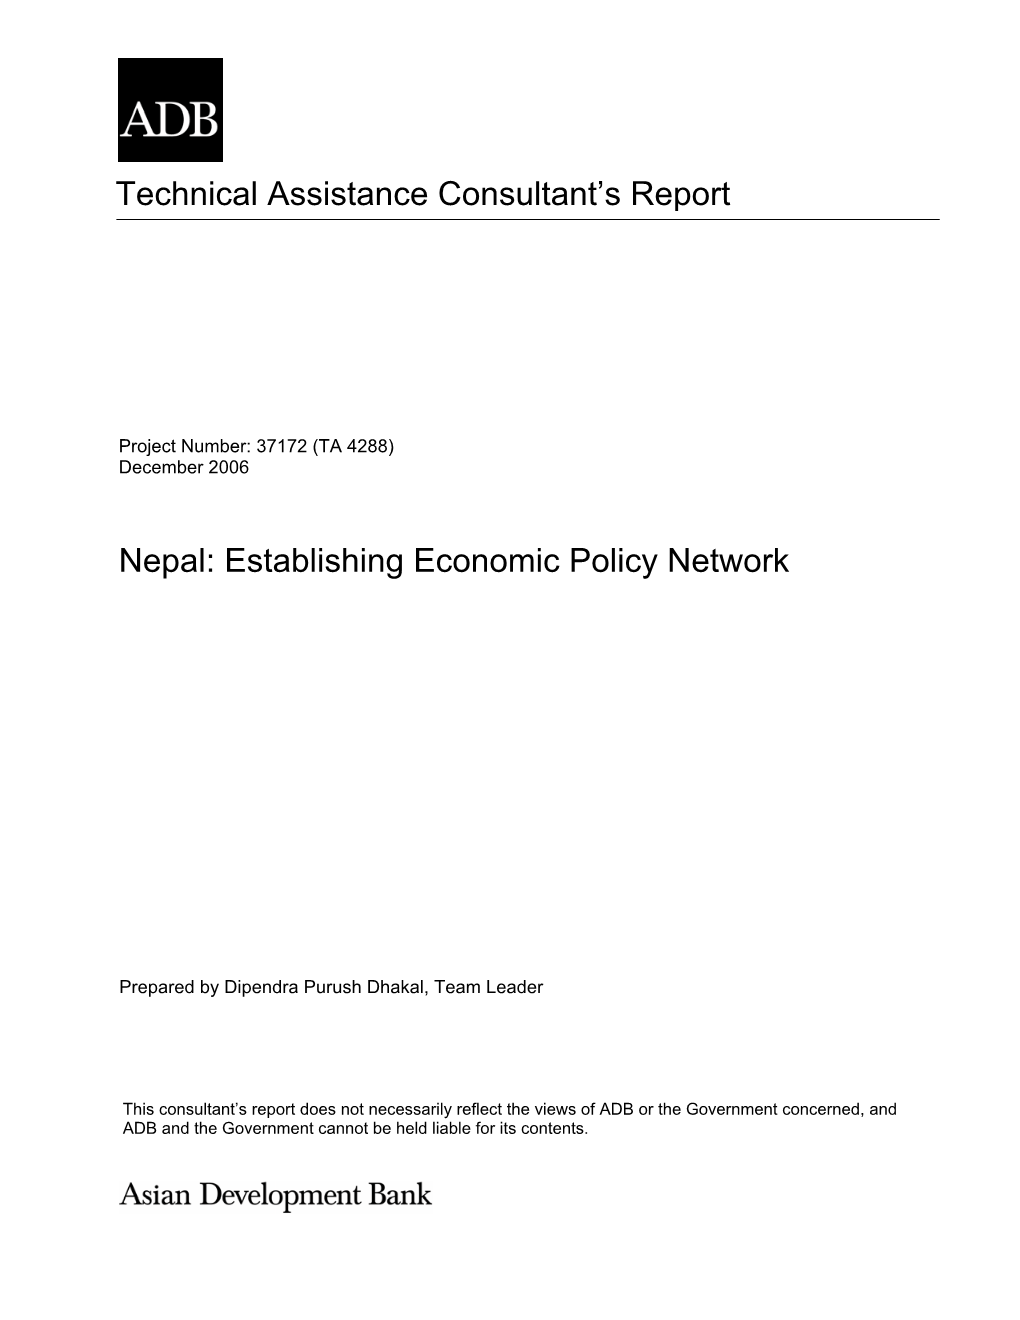 Establishing Economic Policy Network